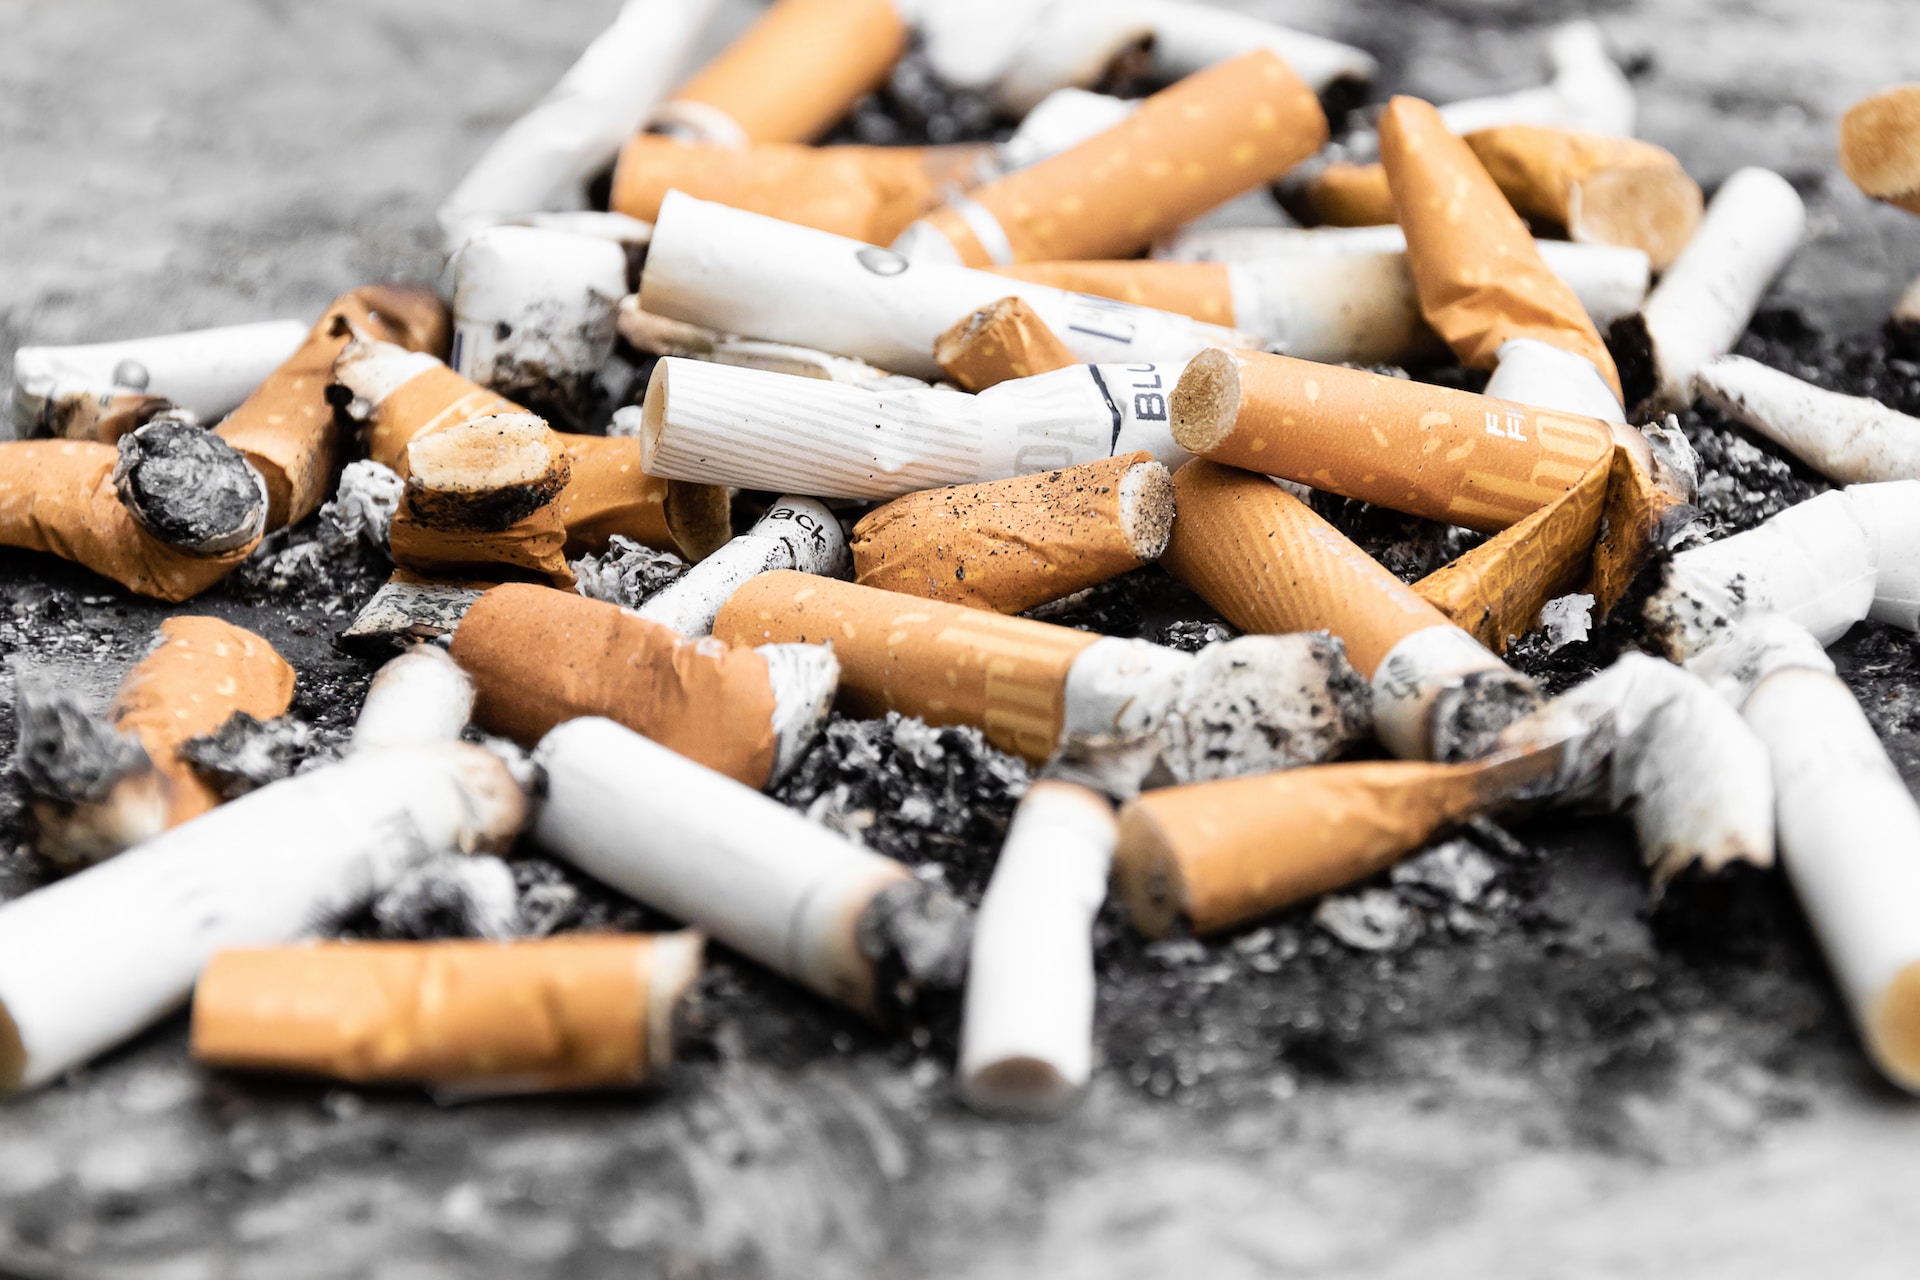 Tobacco-health article